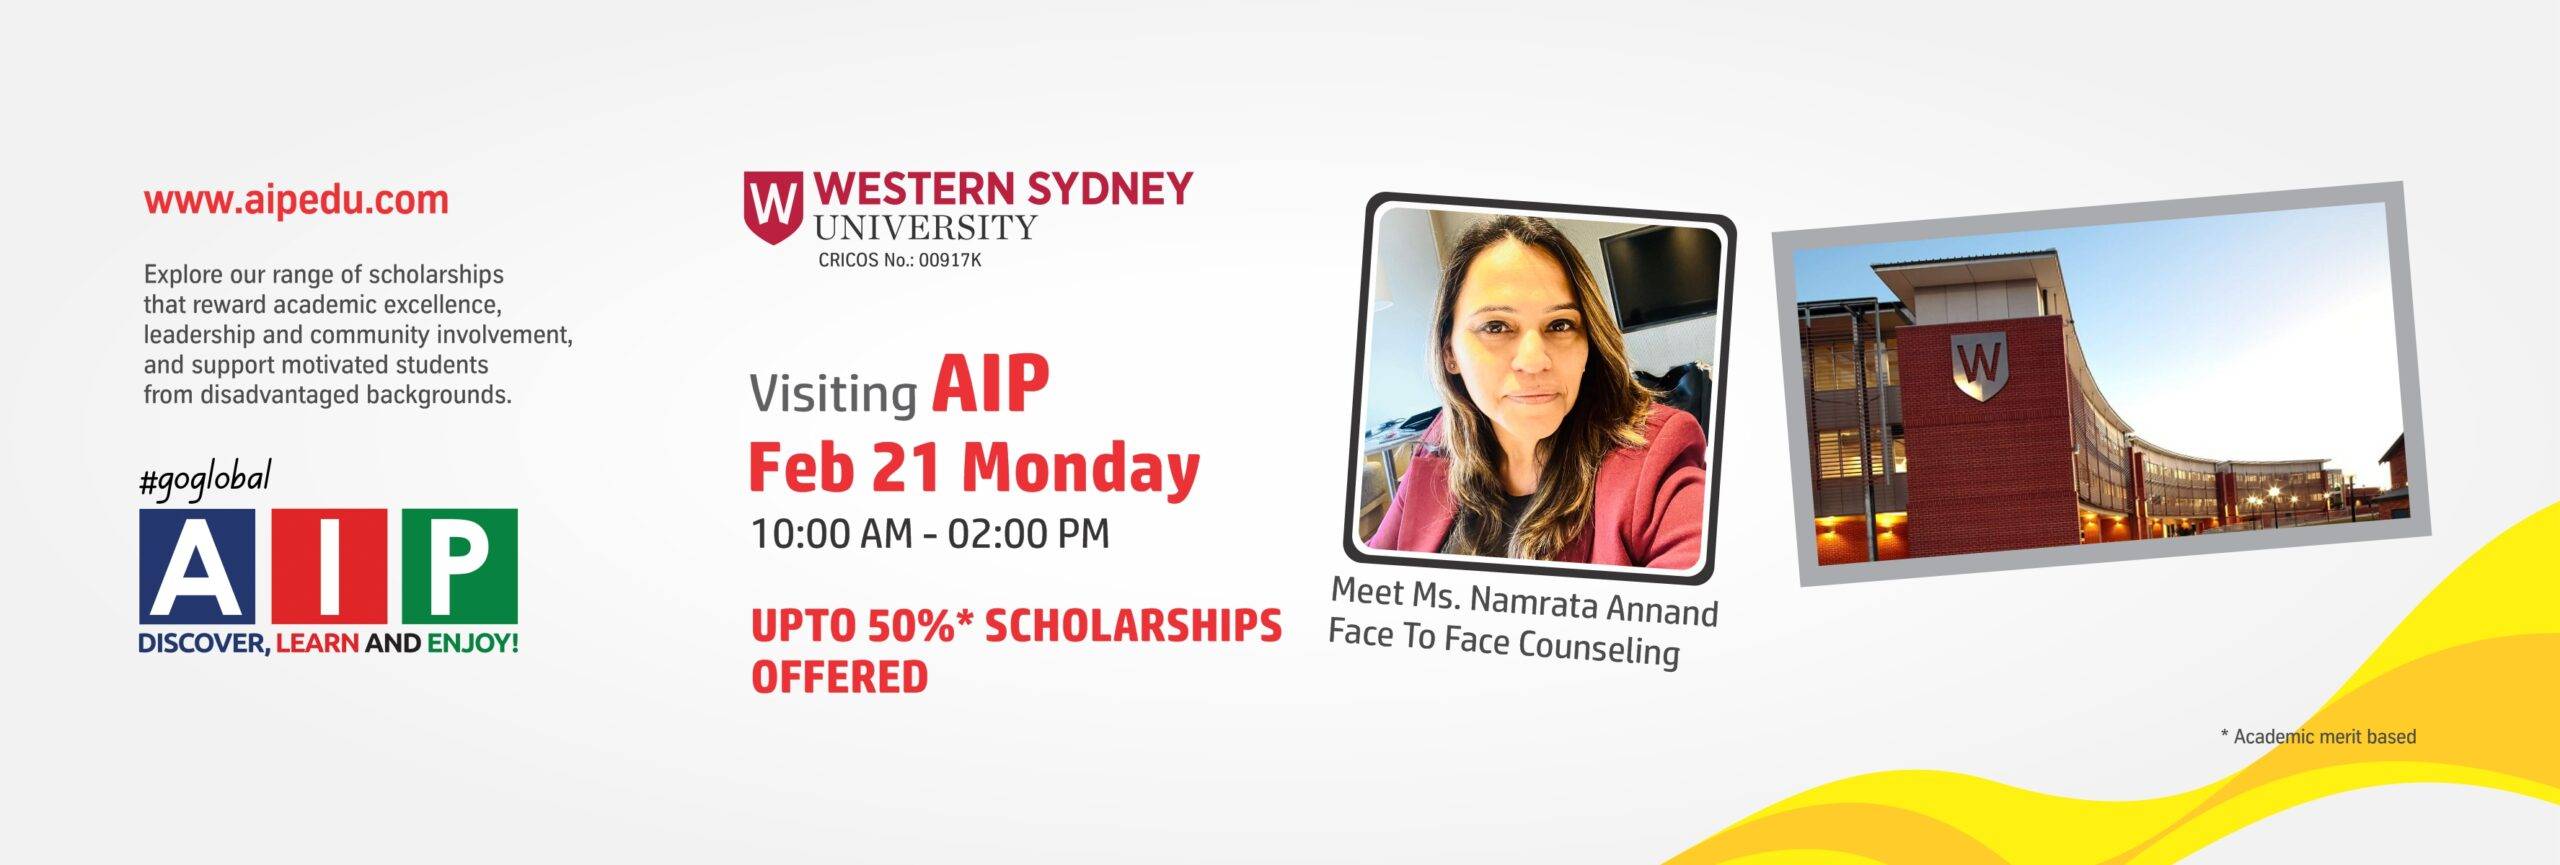 Western Sydney    University Visiting AIP Education Nepal Feb 22, 2022